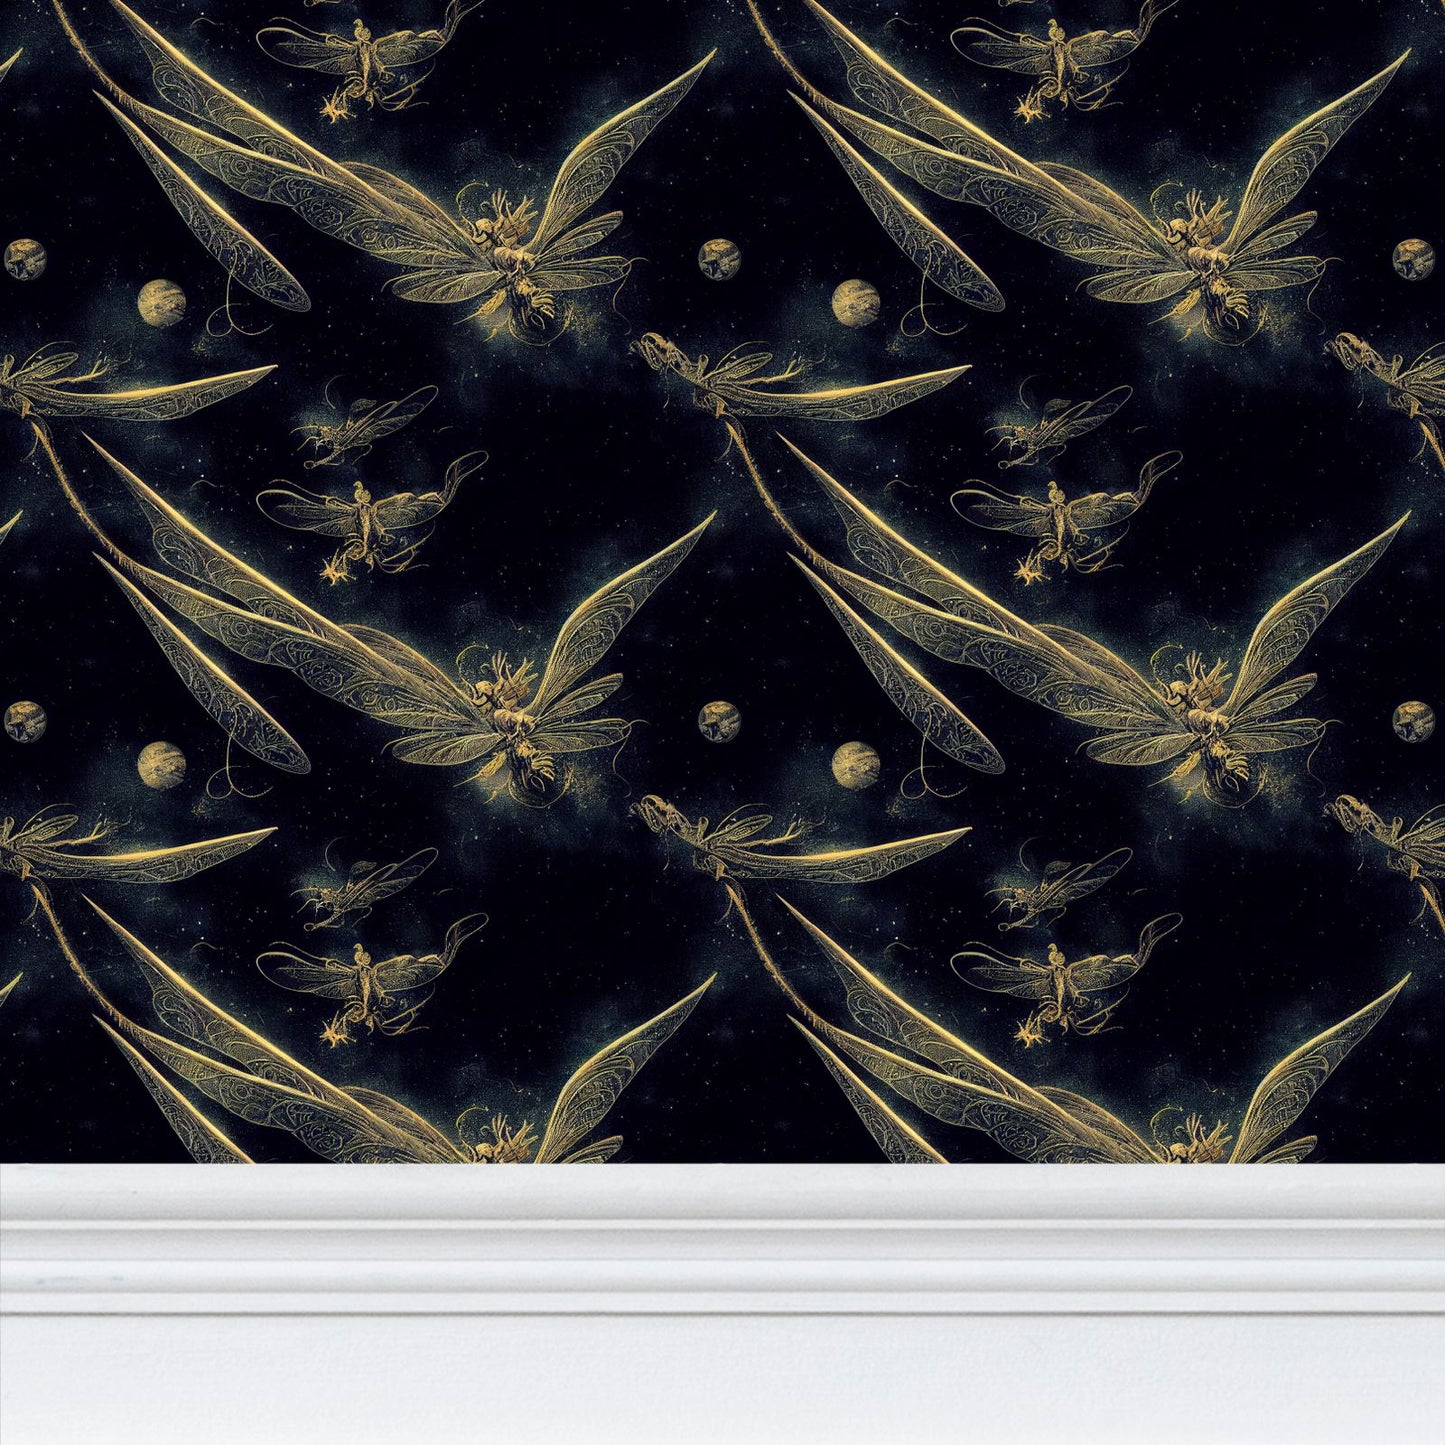 Midnight Dragonflies Repeat Pattern Wallpaper